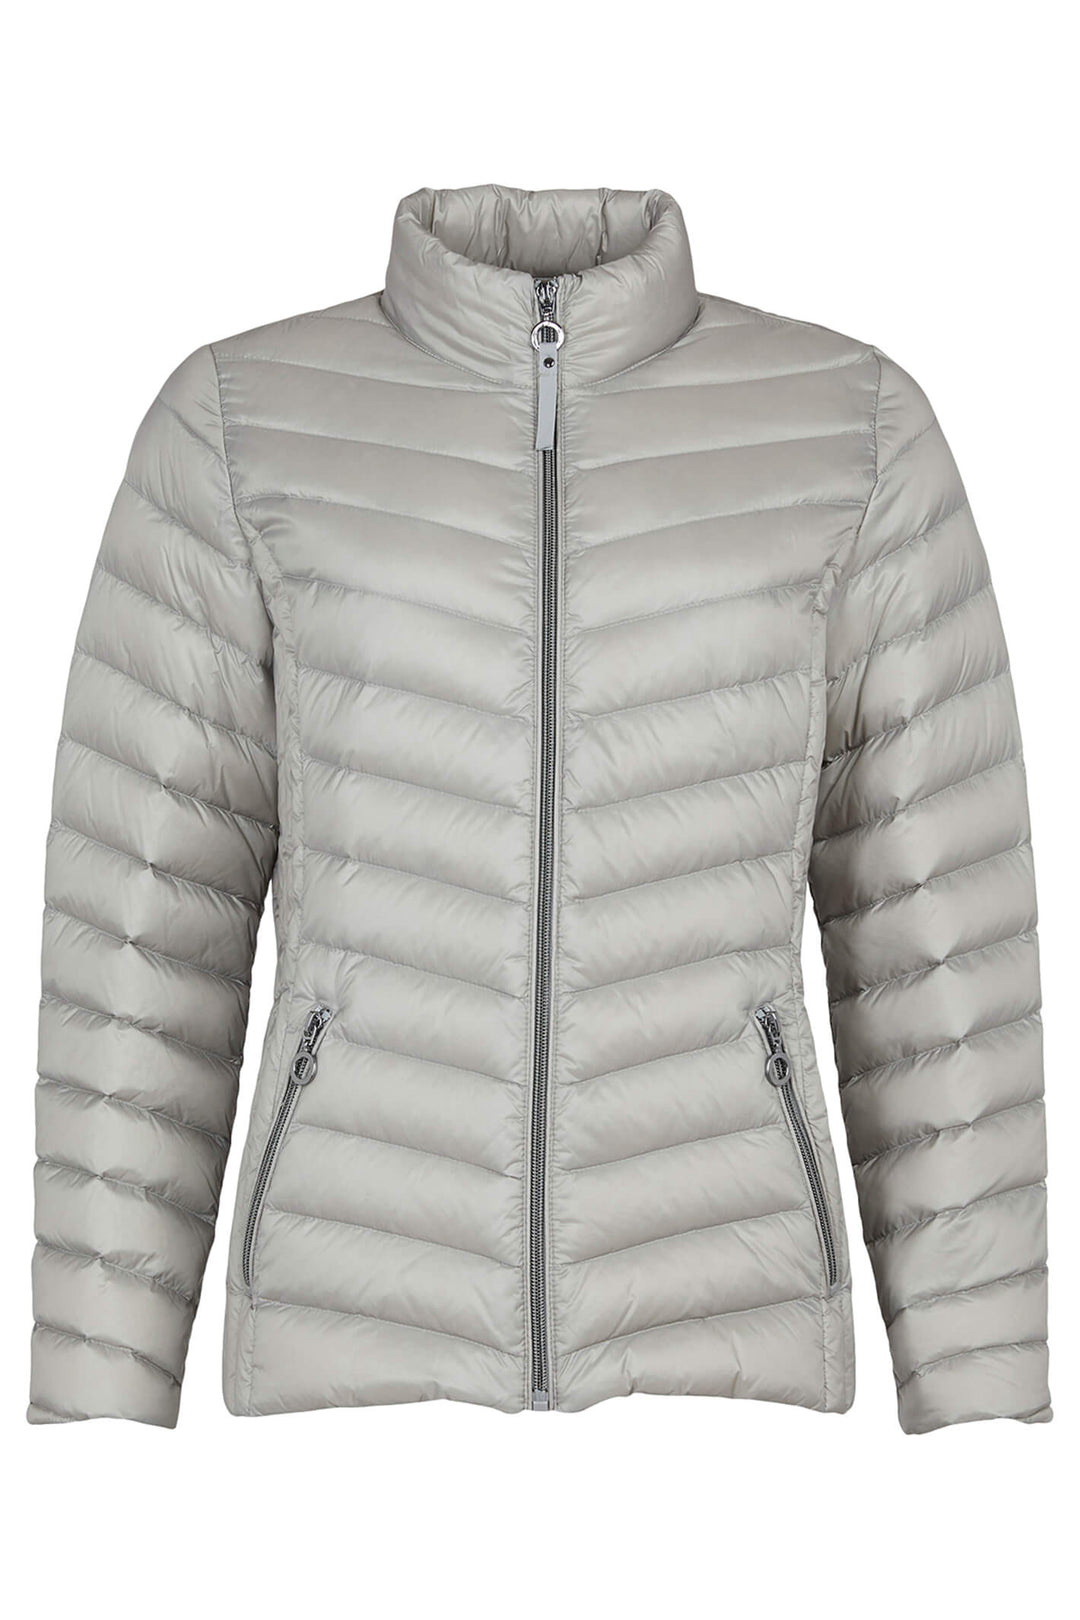 Frandsen 528-588-44 Silver Grey Padded Zip Front Jacket - Dotique